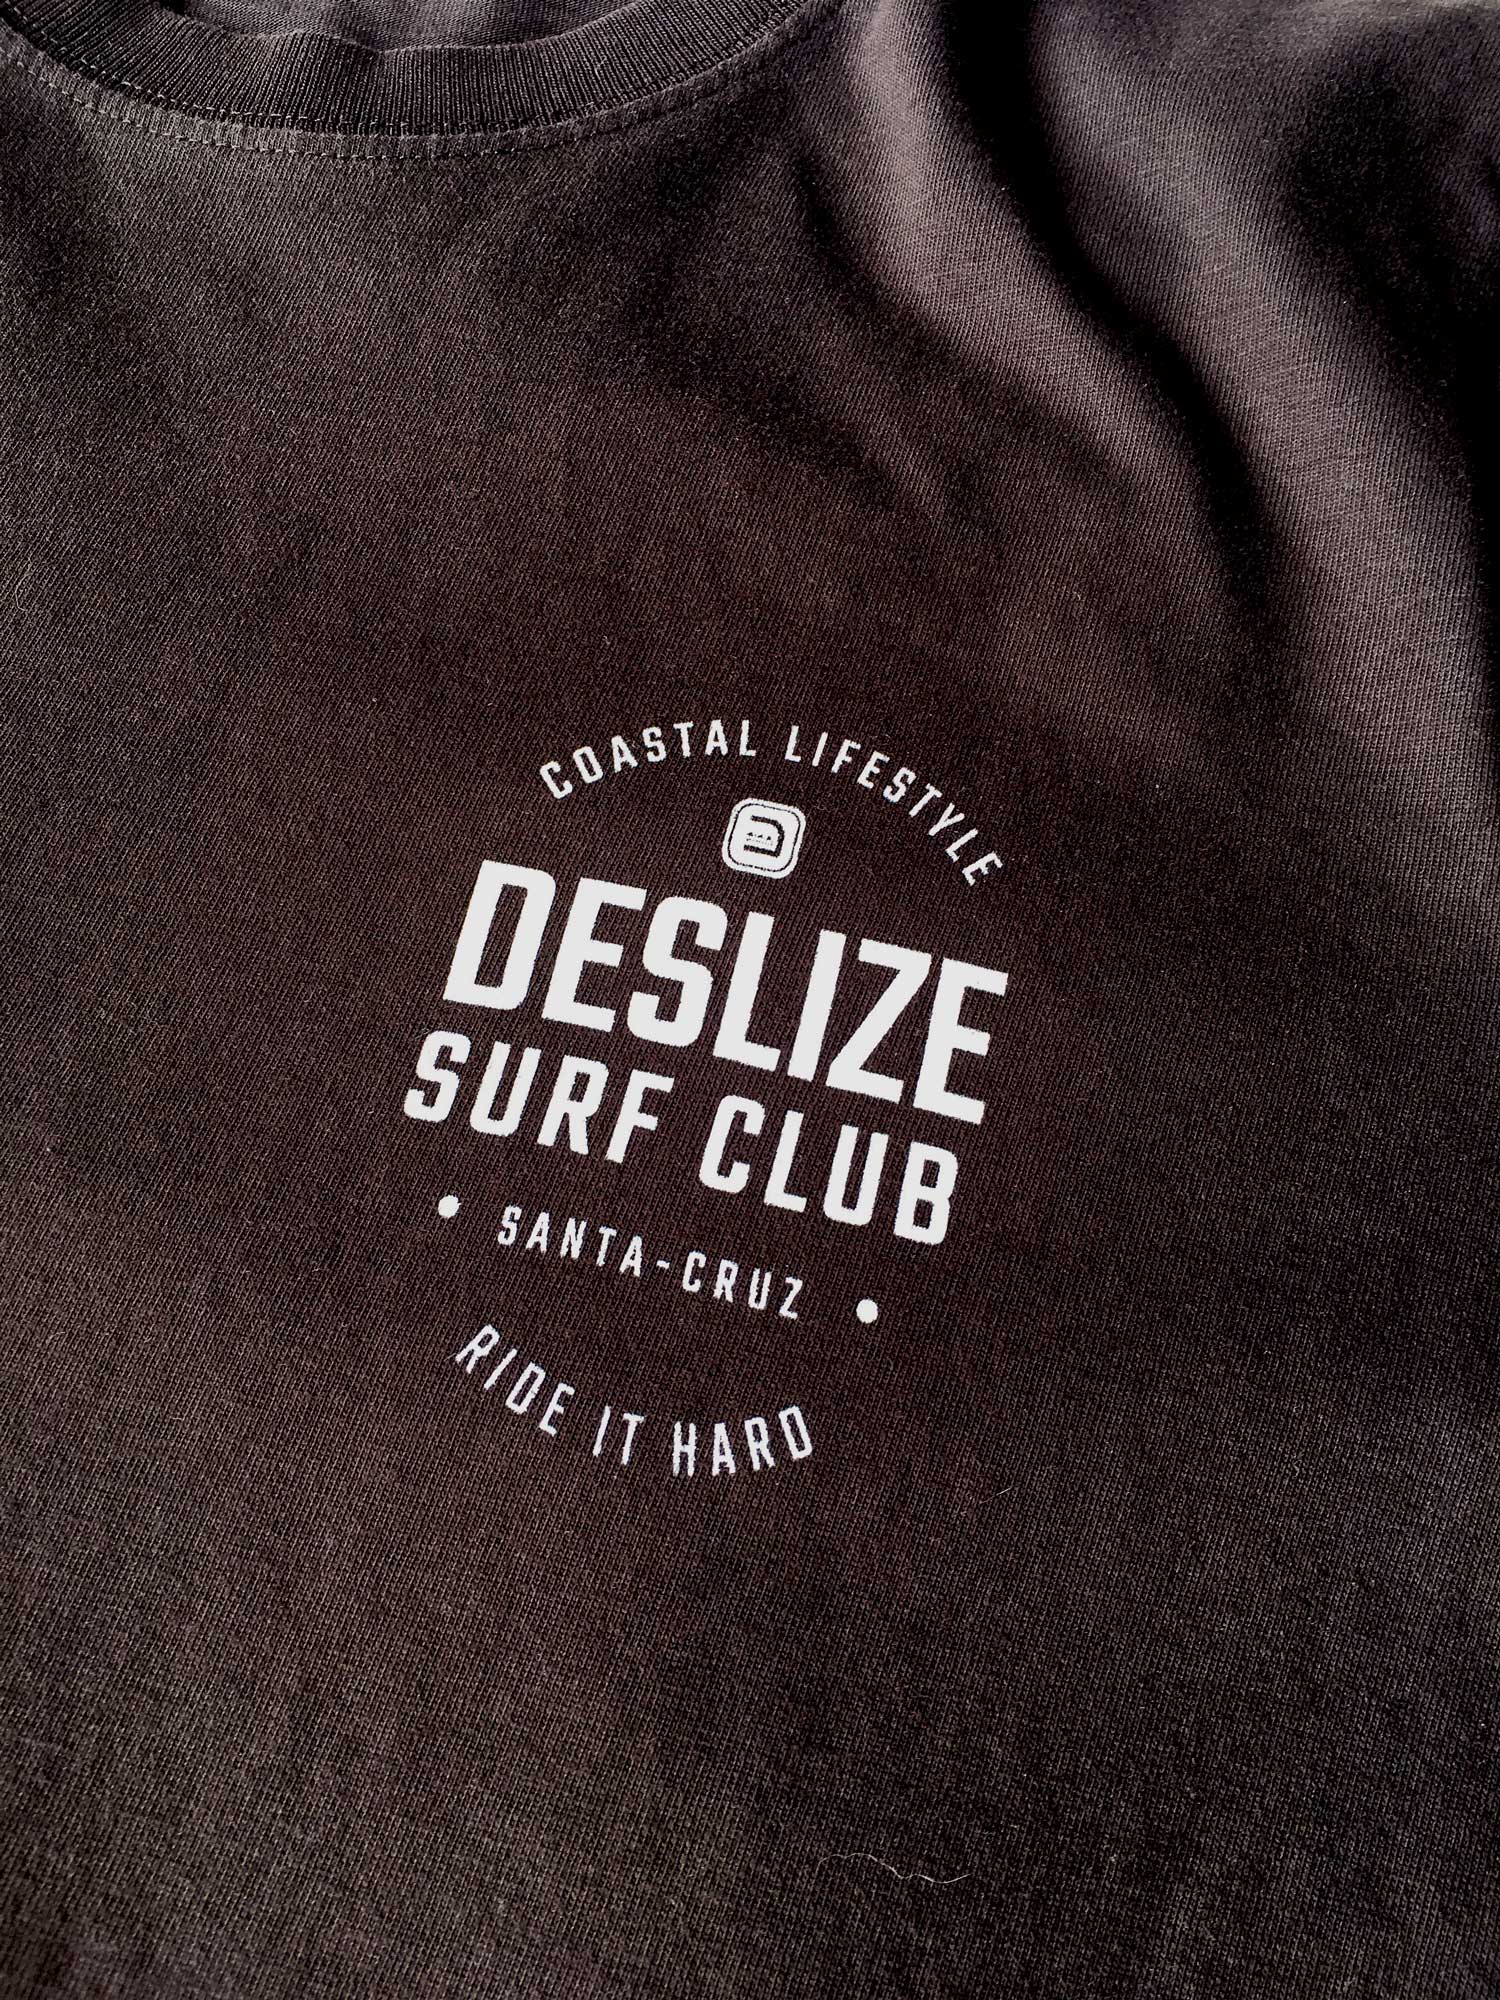 Desilze Surf Club Tshirt, Front side close-up